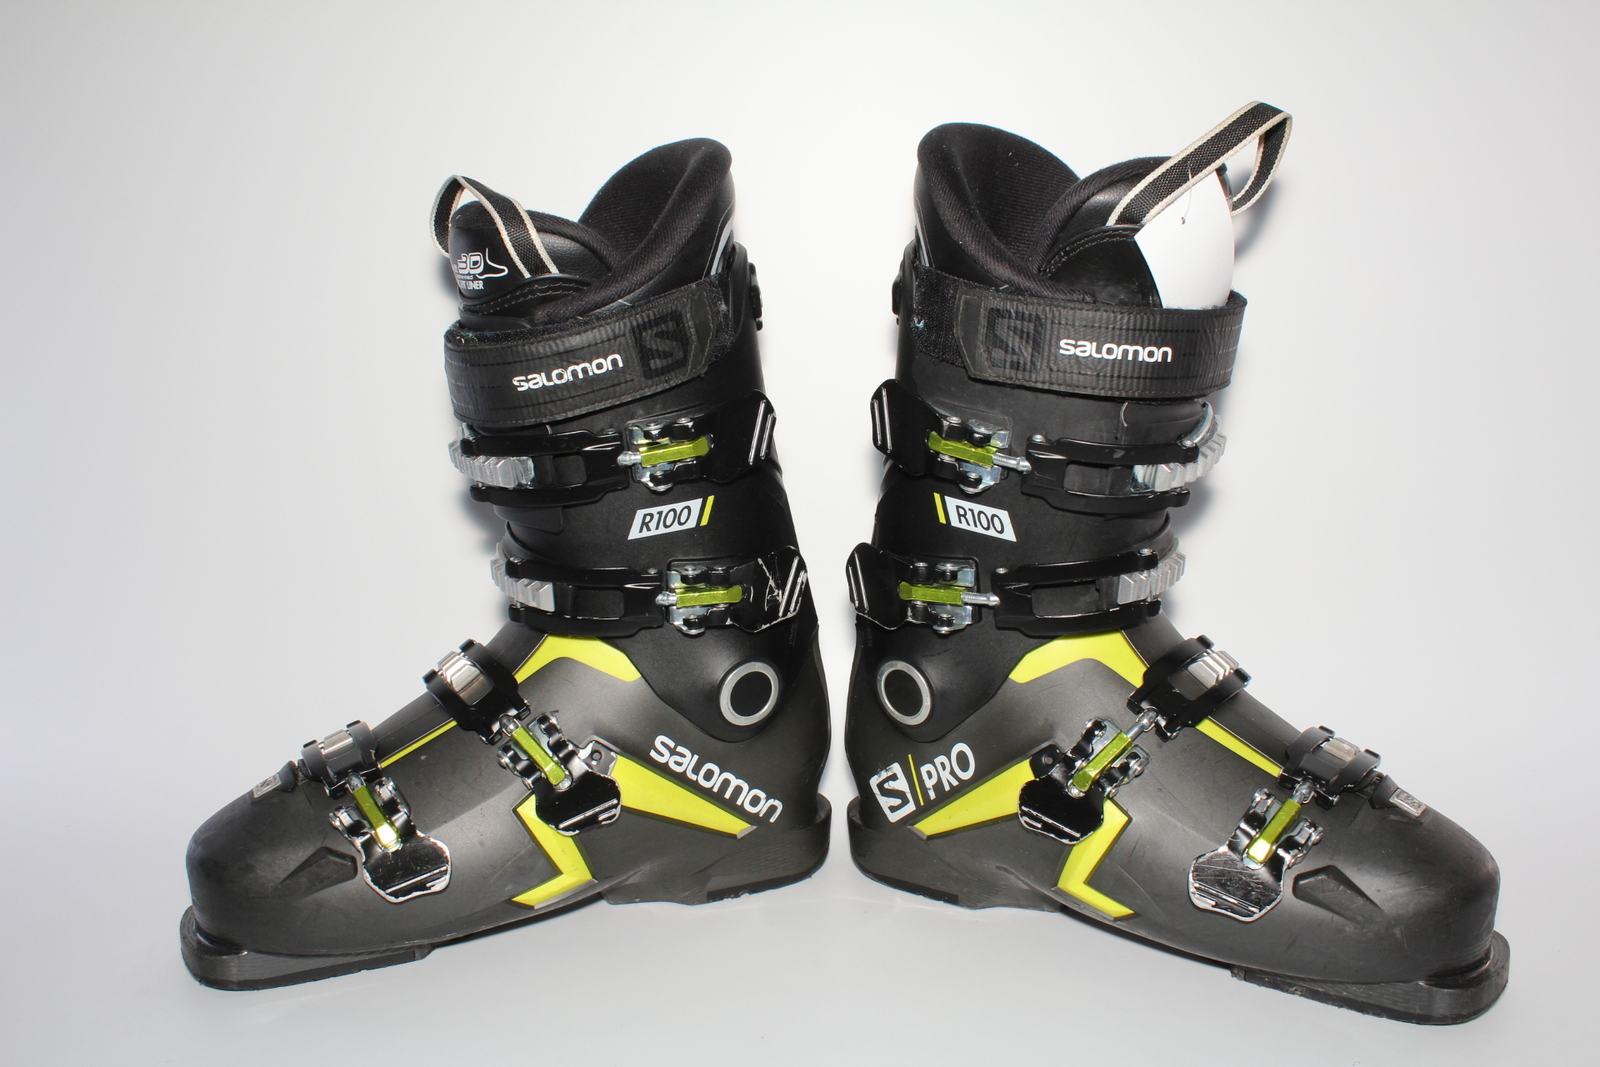 Lyžařské boty Salomon S Pro R100 vel. EU42.5 flexe 100